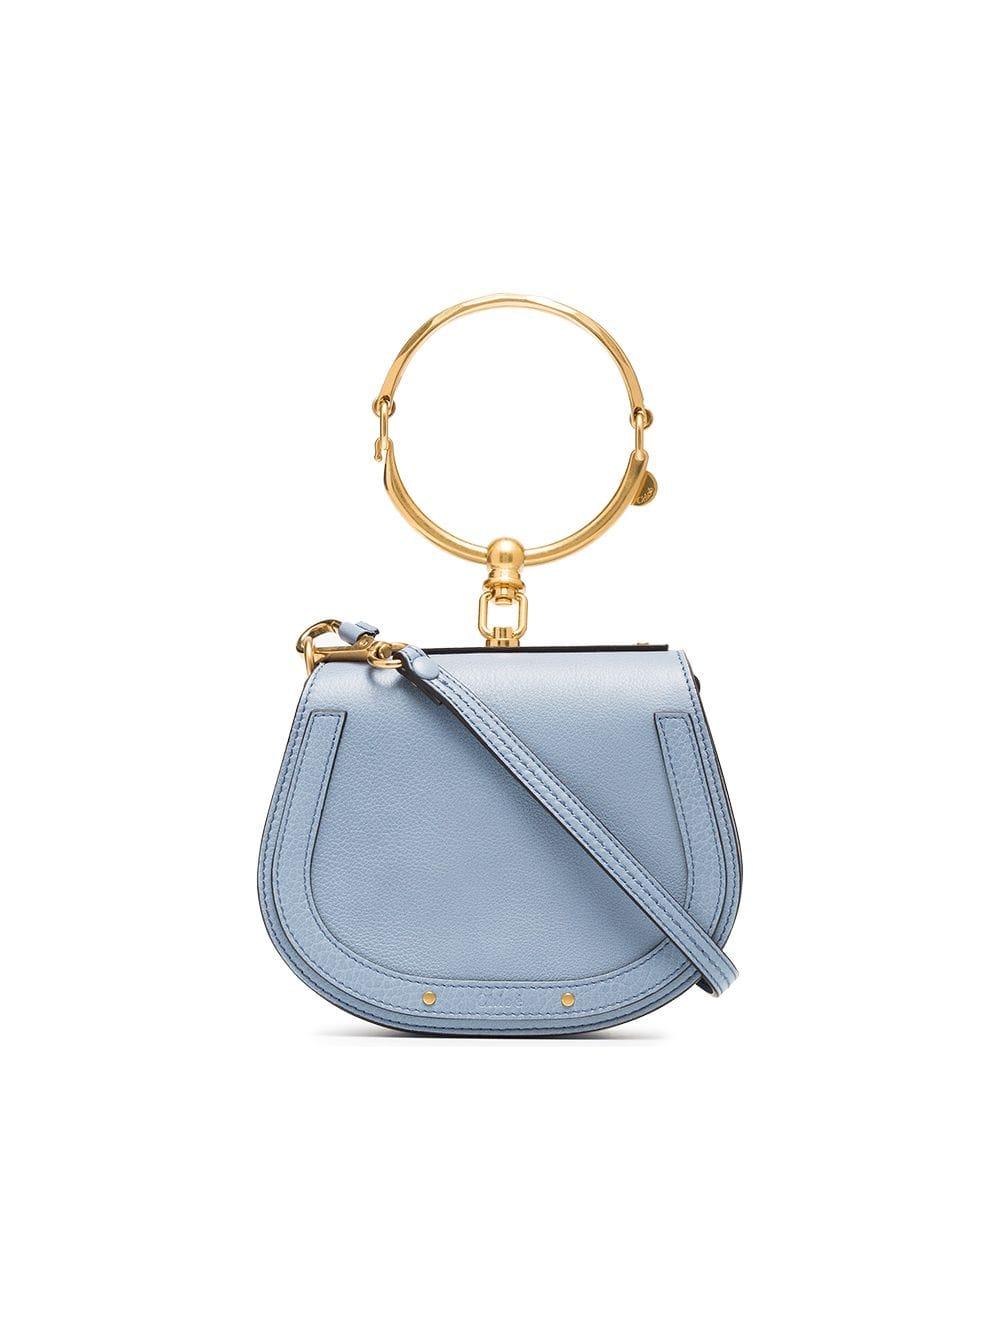 Chloé Nile Small Leather Bracelet Bag in Blue